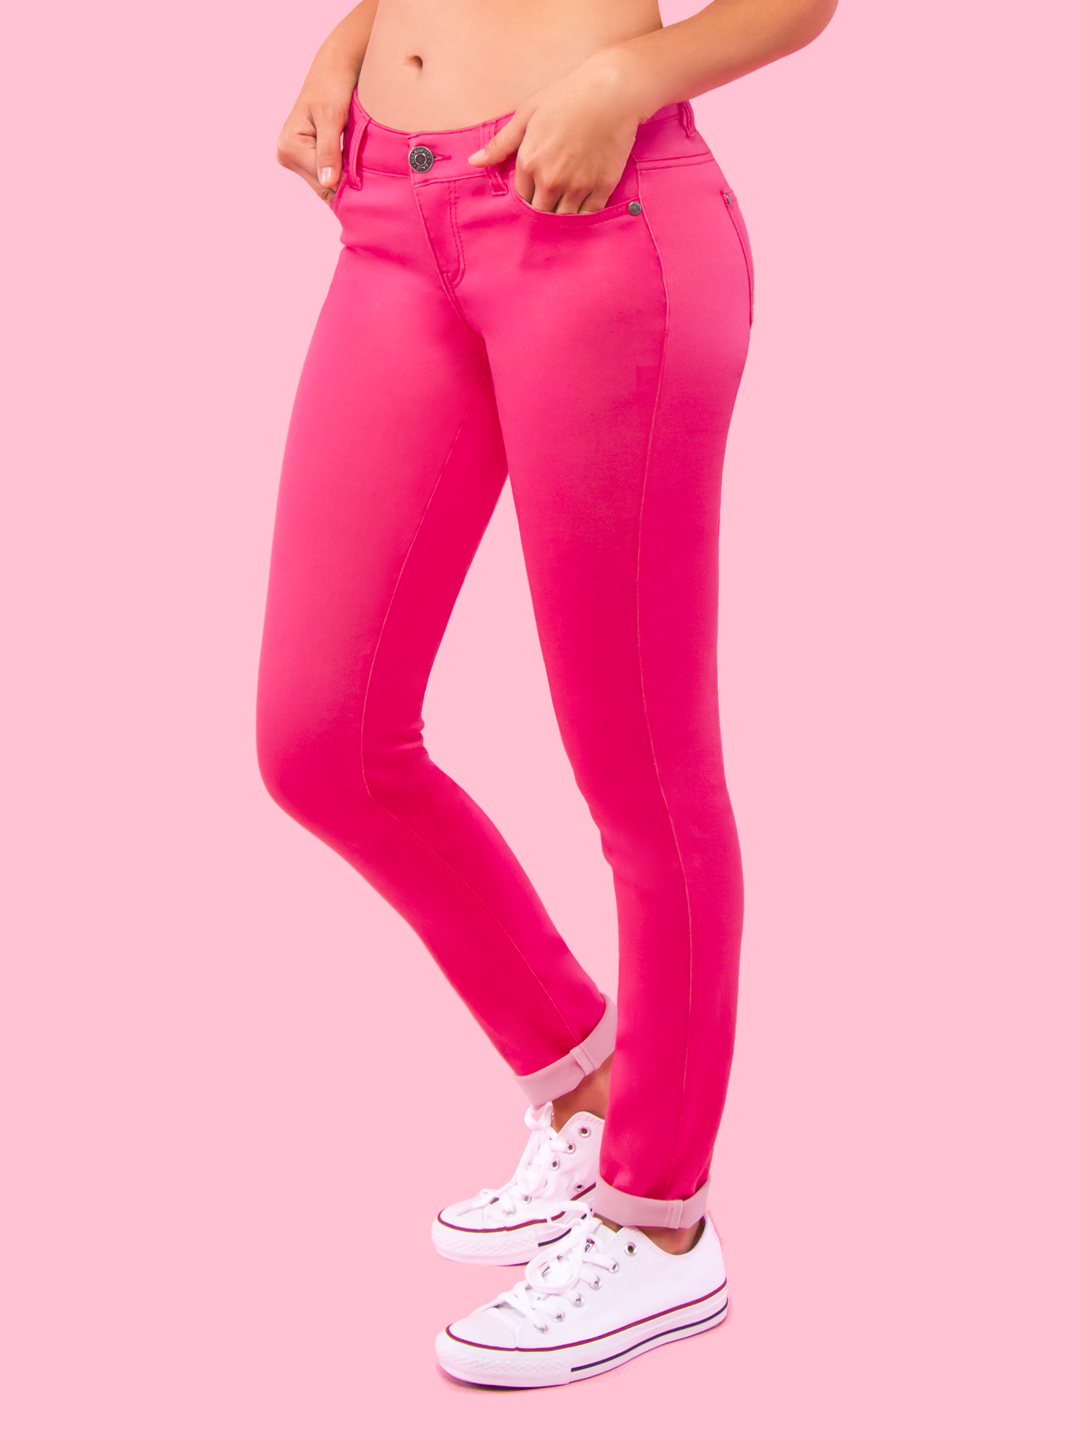 celebrity pink jeans walker skinny